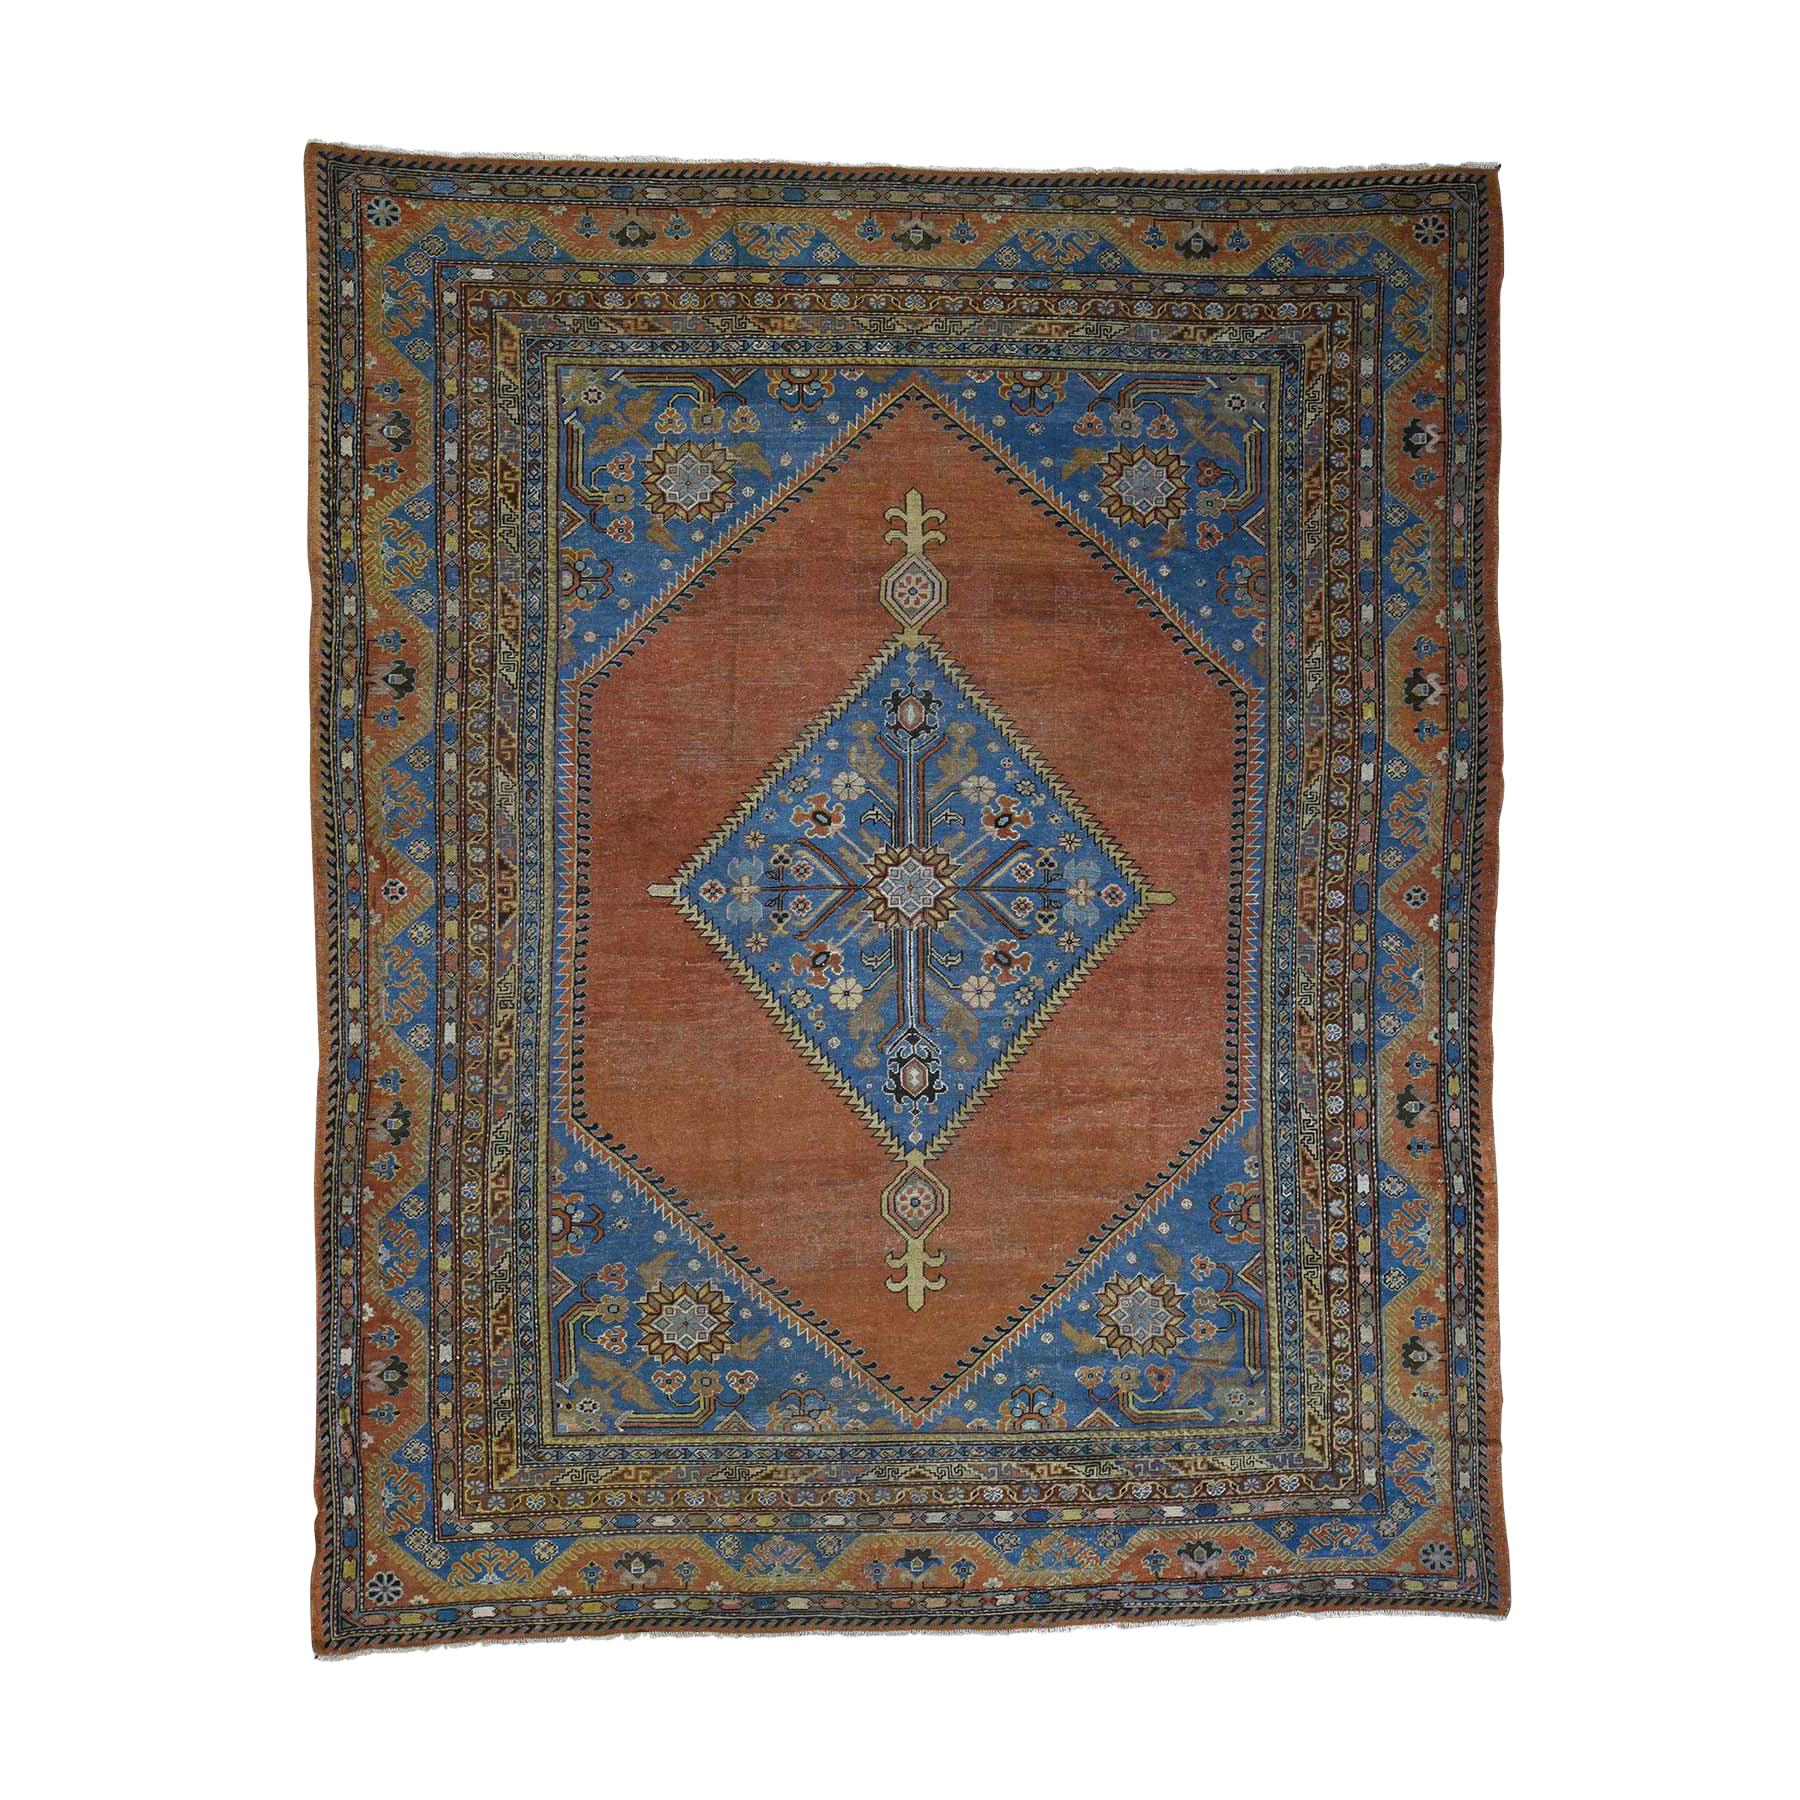 1900 Antique Samarkand with Bakshaish Design Rug, Open Field Rust